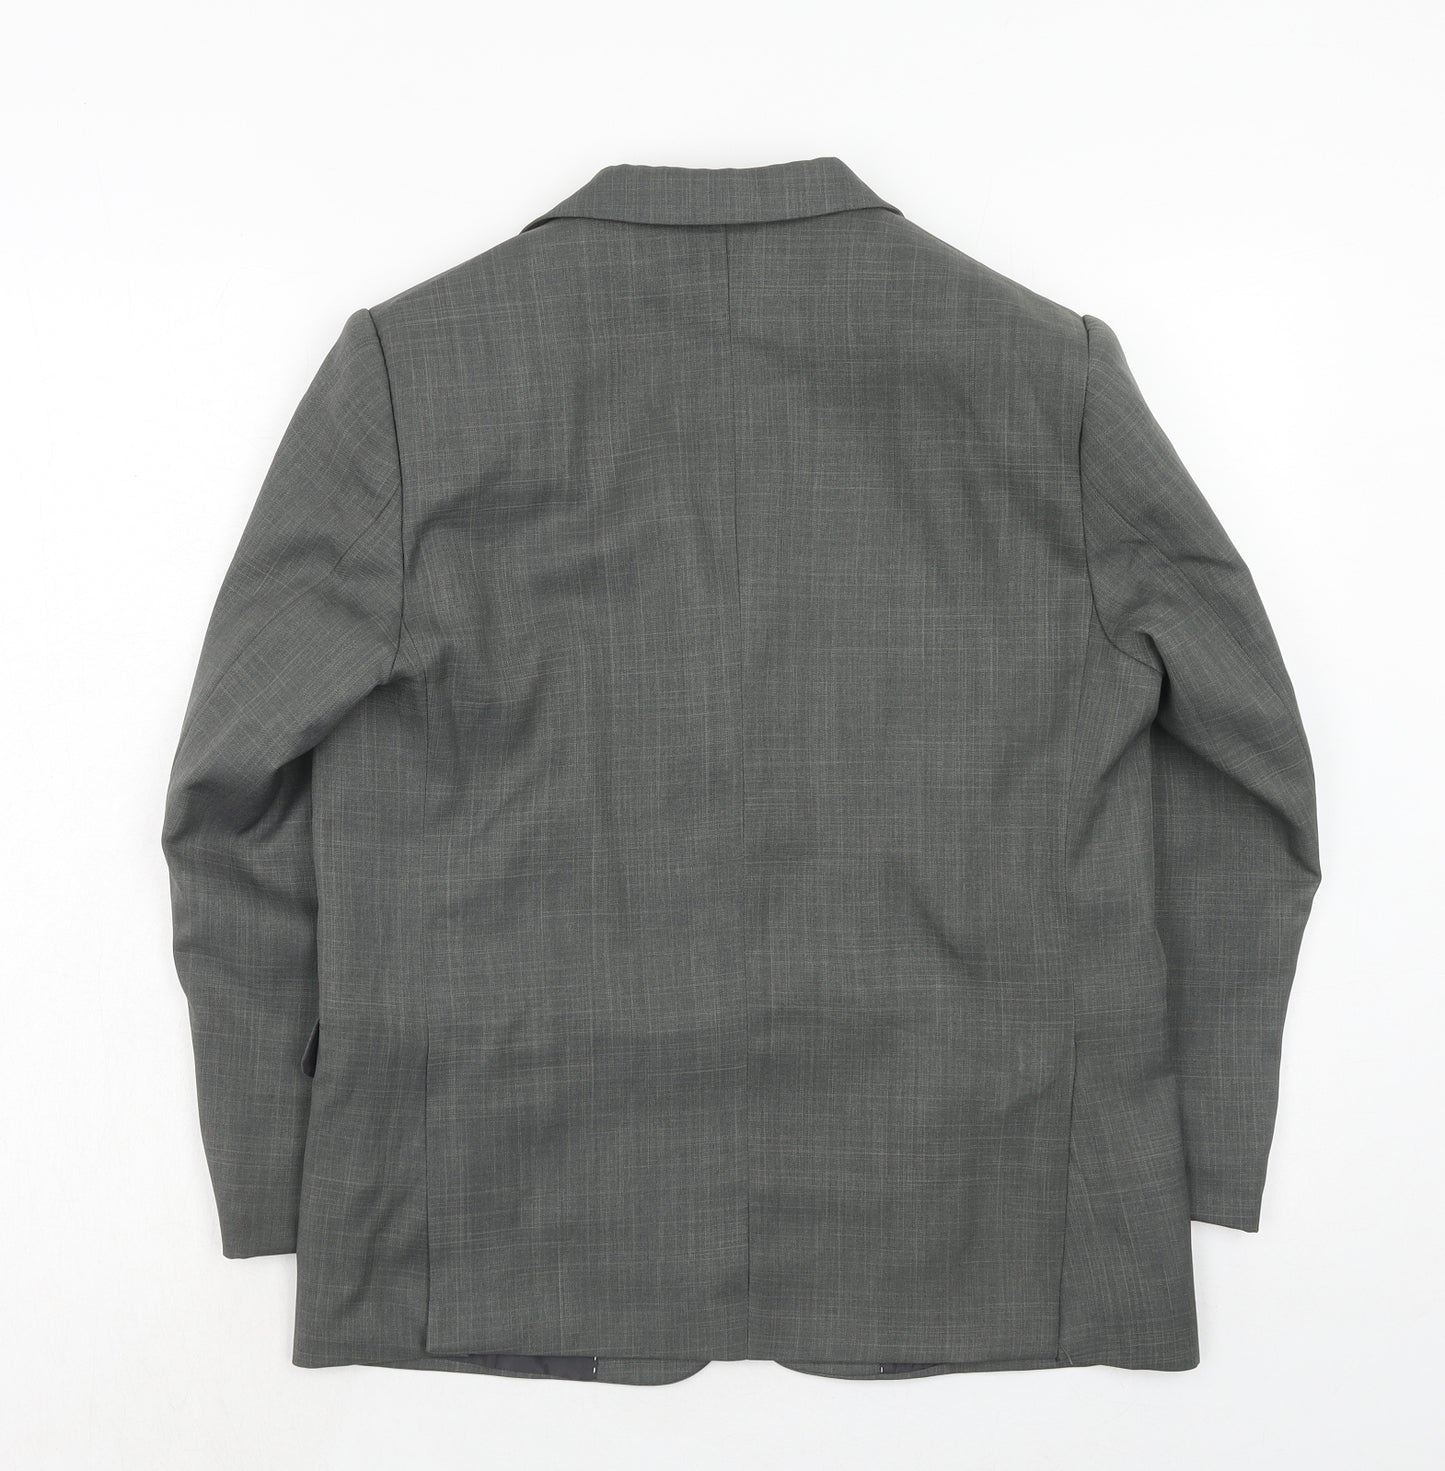 cenario Womens Grey Polyester Jacket Suit Jacket Size M